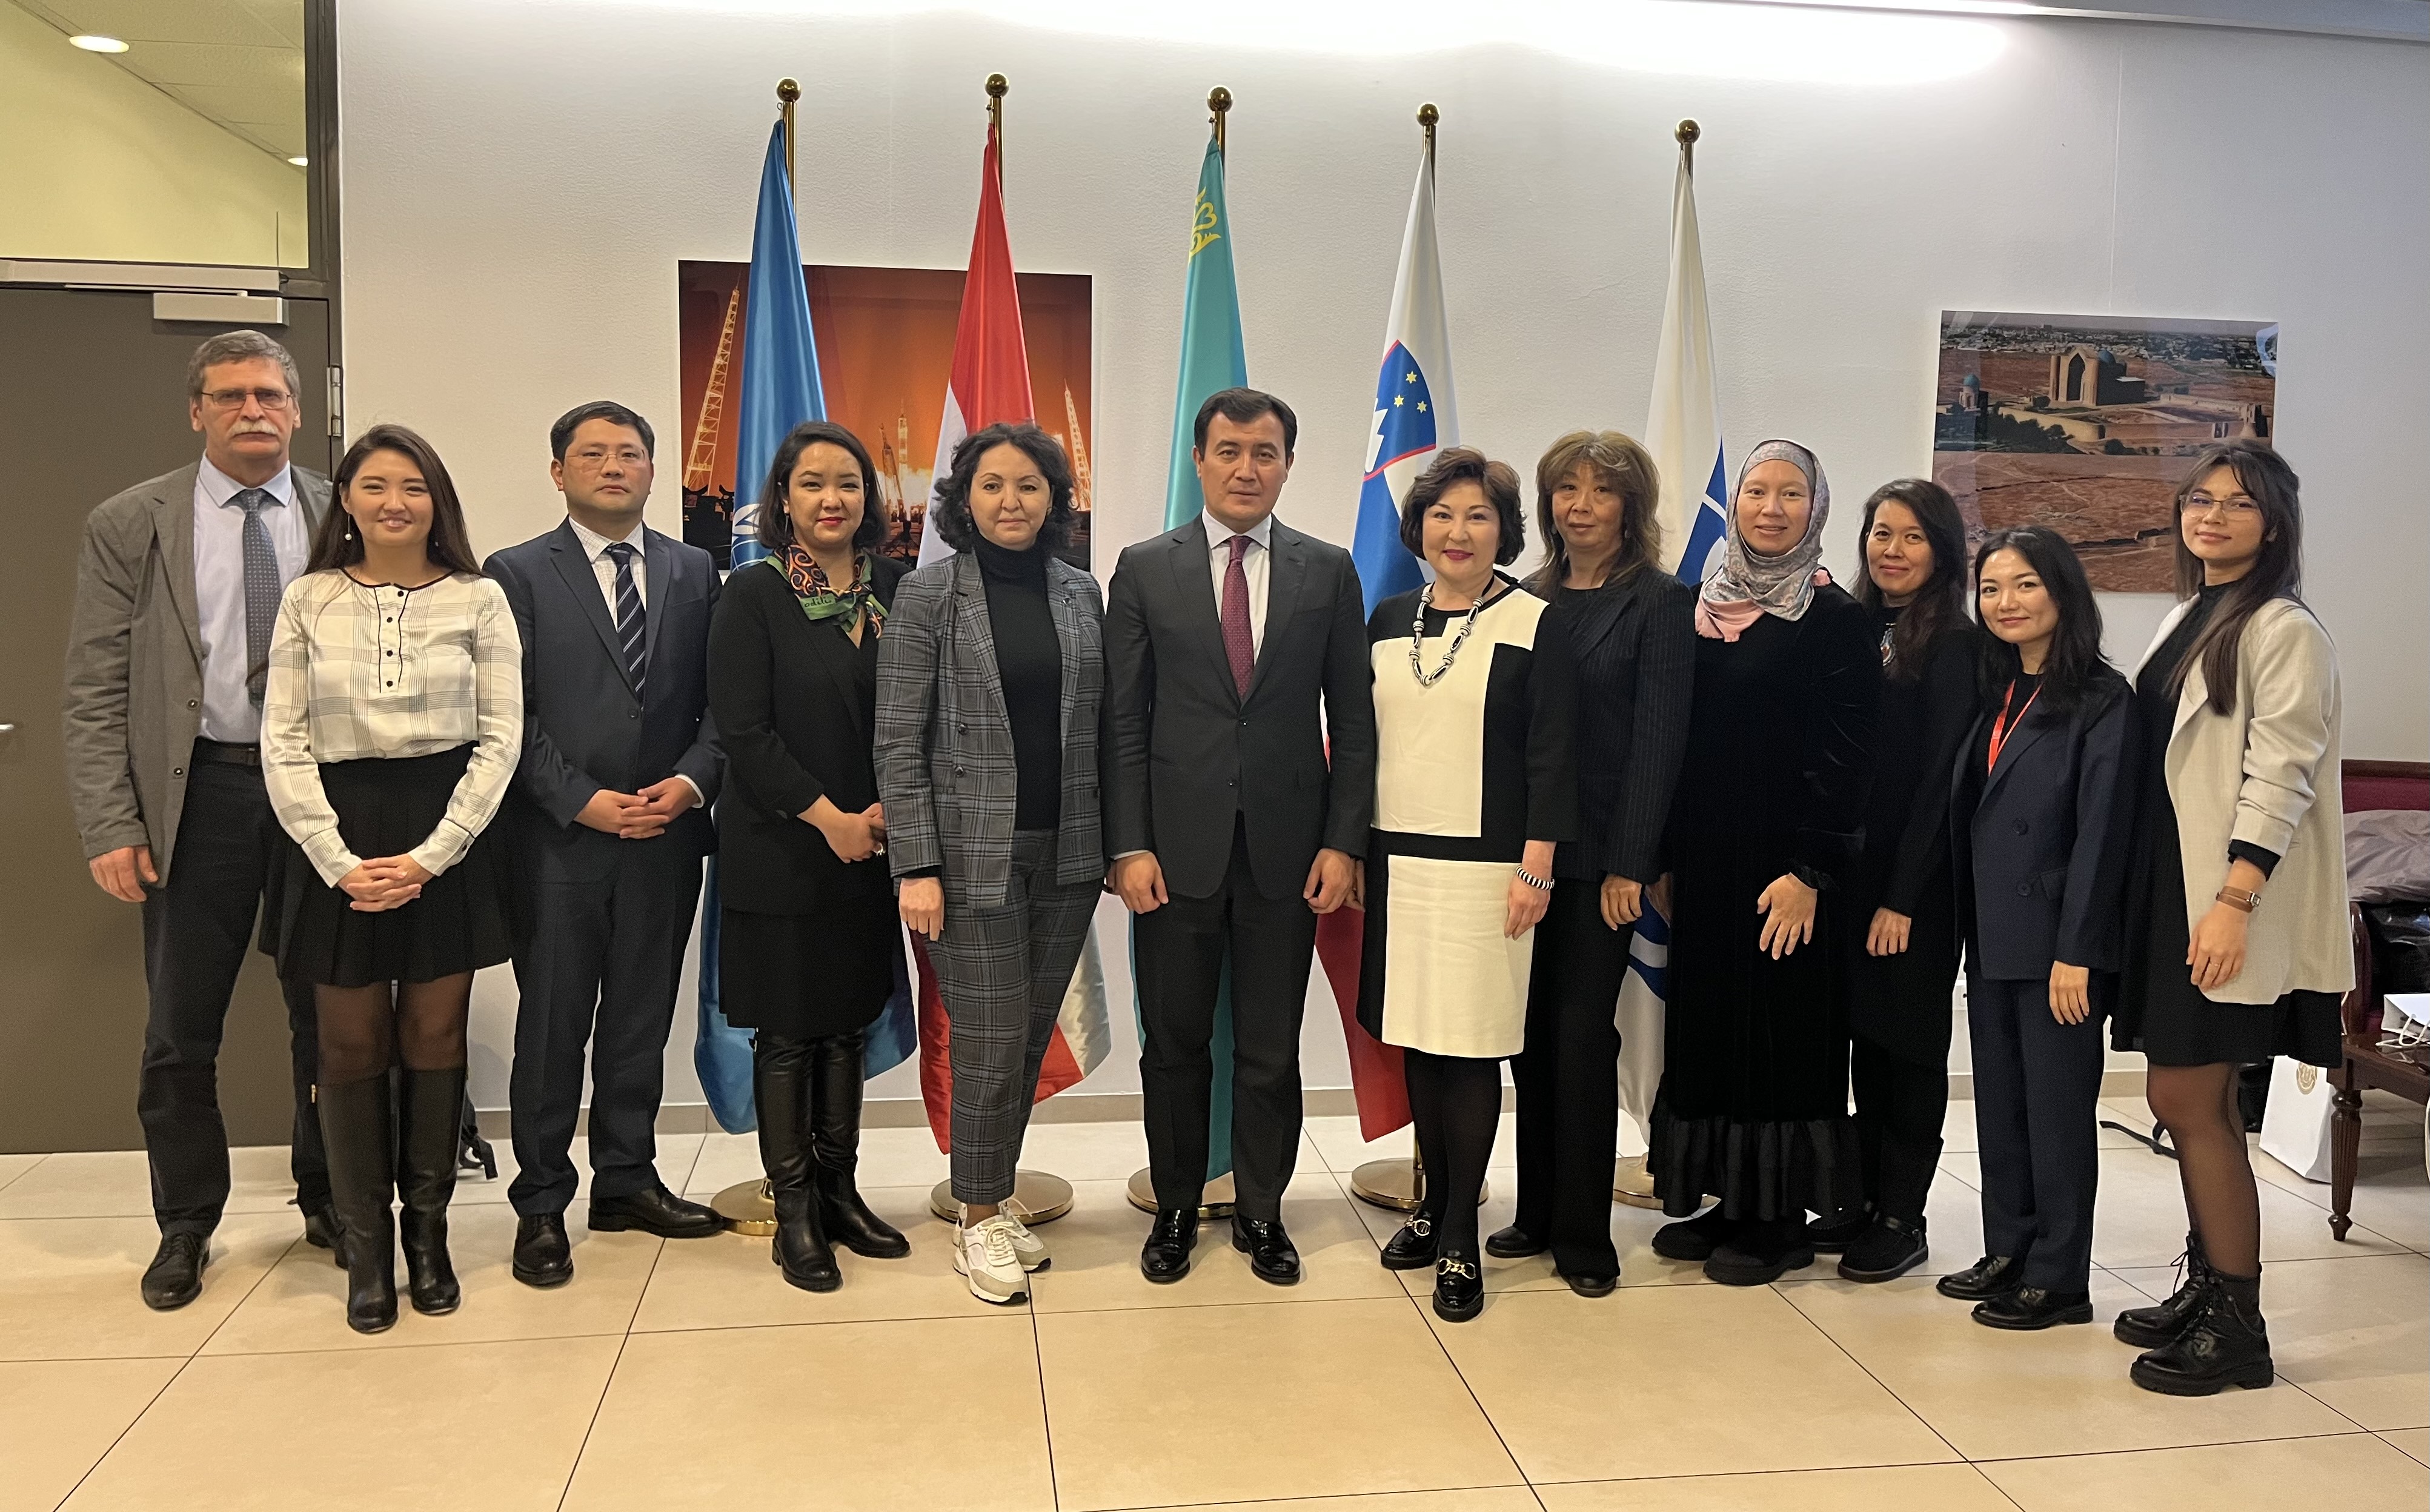 The Kazakh Permanent Representative met with the representatives of the Vienna-based international organizations